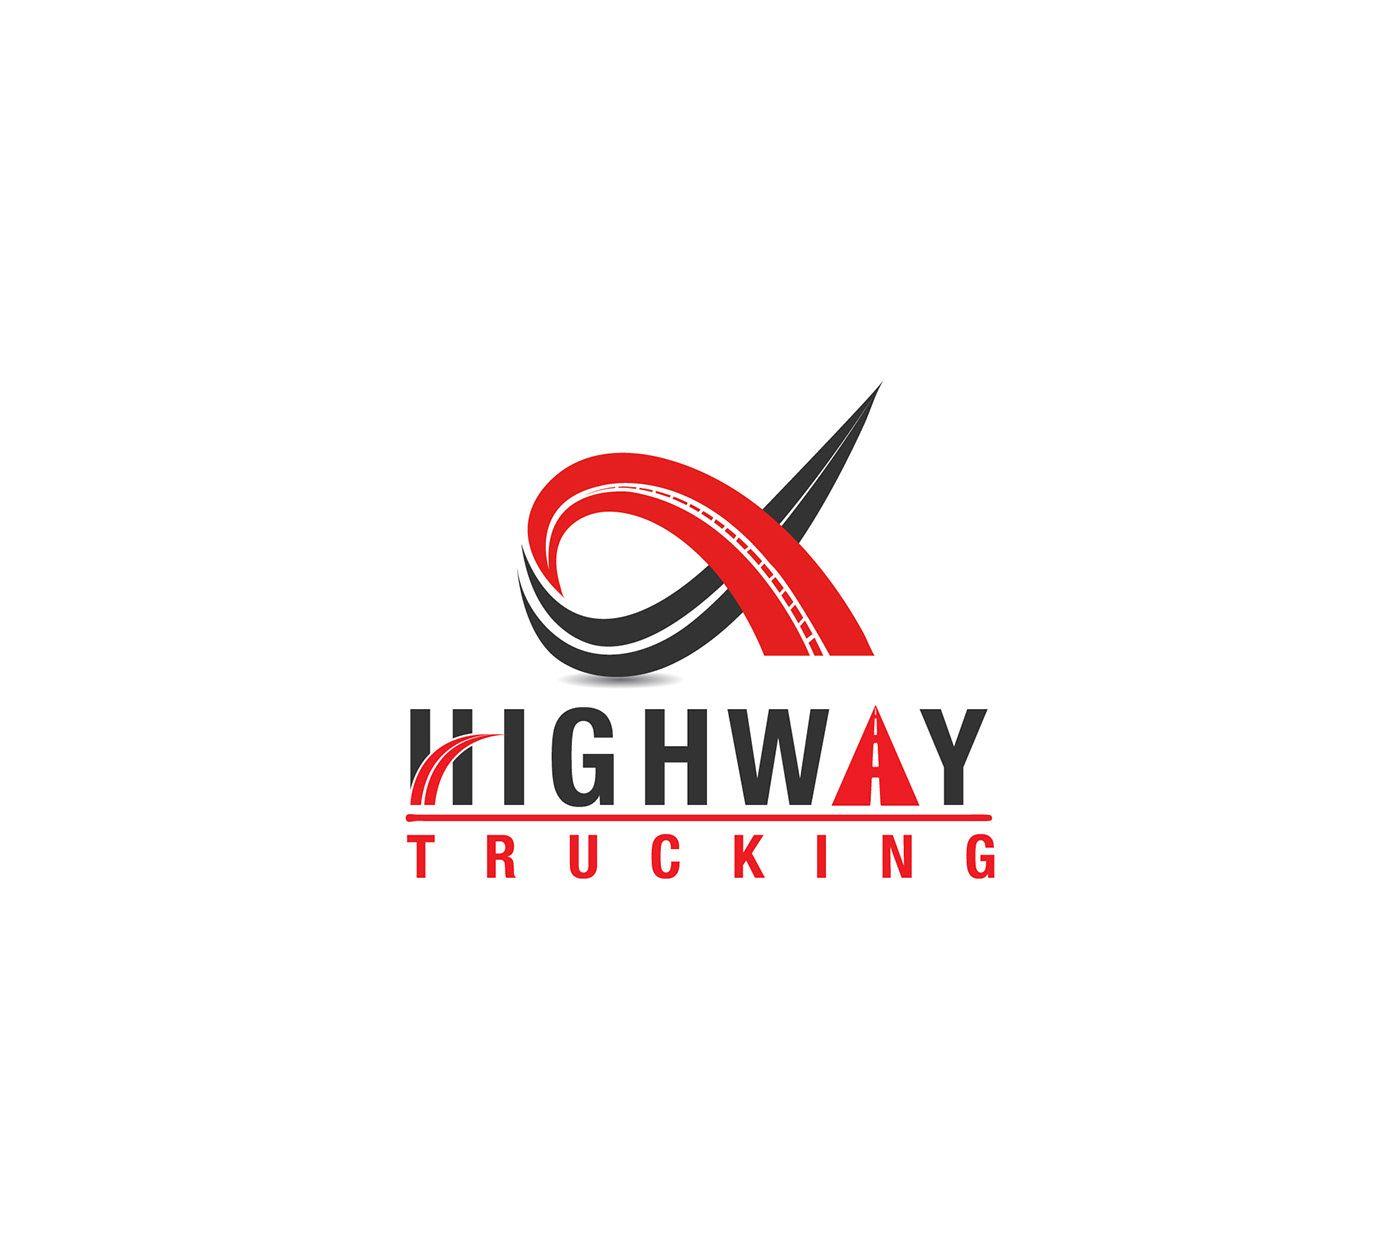 Trucking Logo - Highway Trucking Logo design on Behance